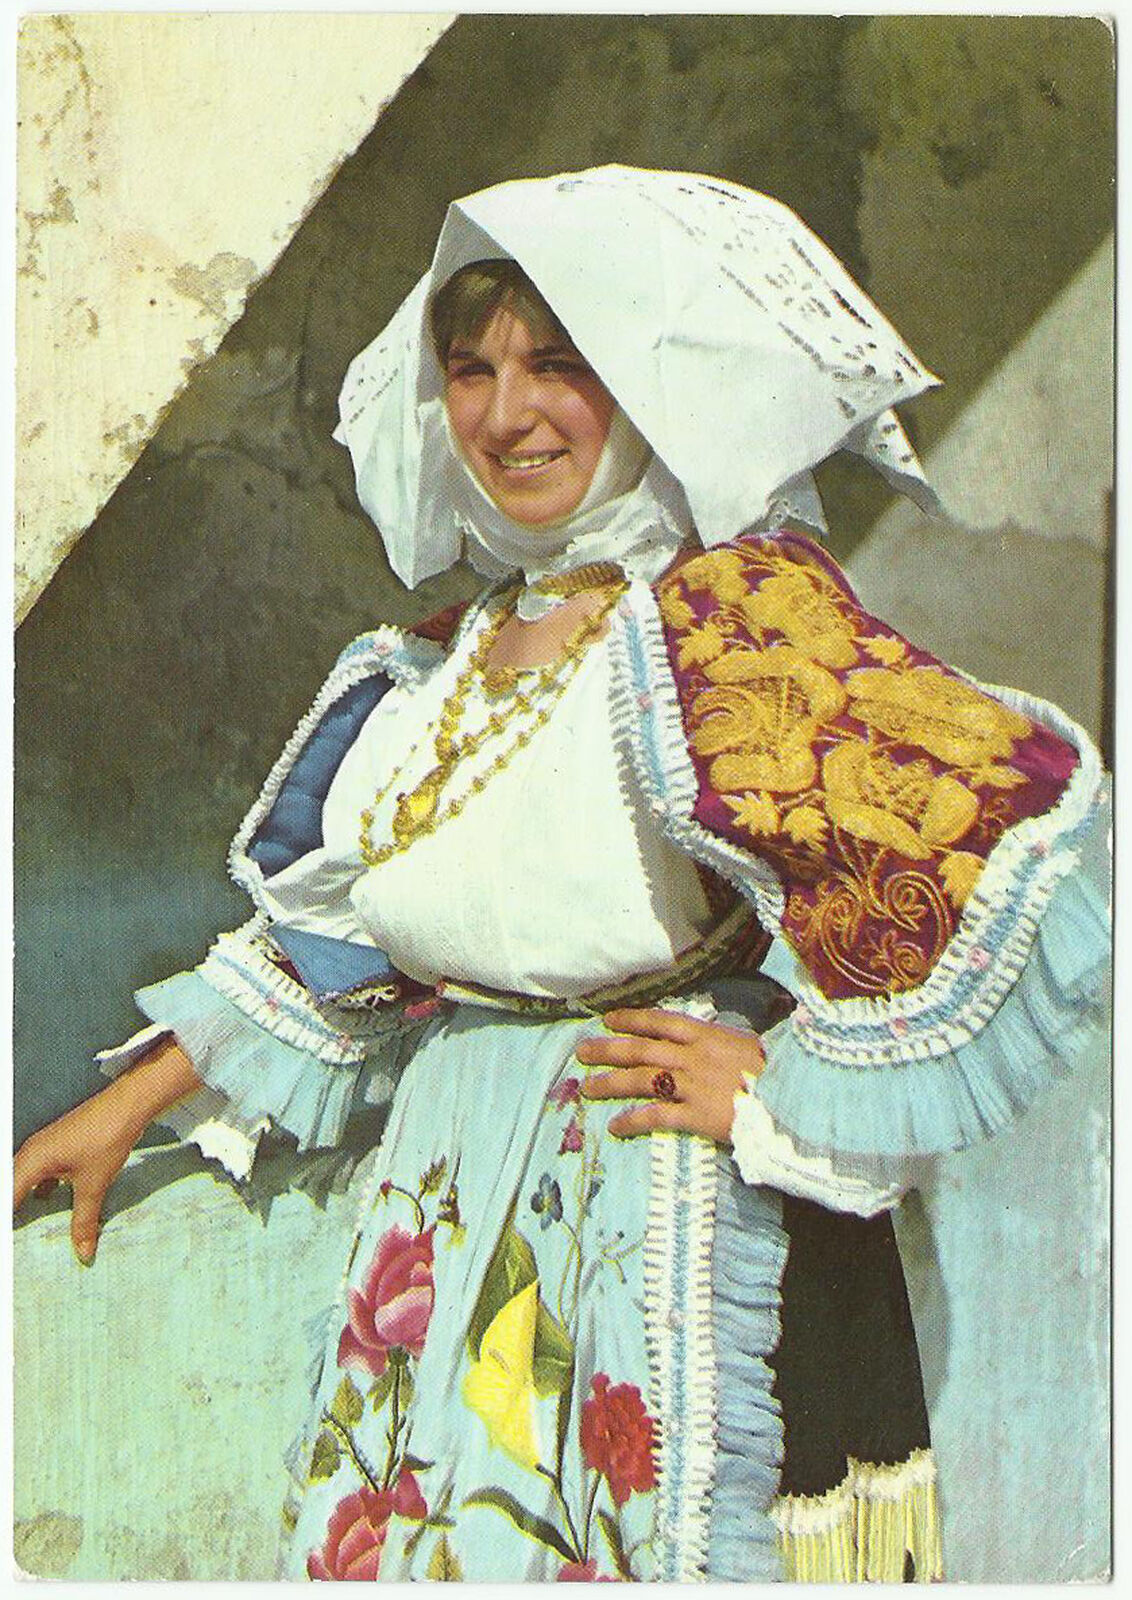 Sardinian Costumes, Vintage Postcard, Sennori Italy, Traditional Dress